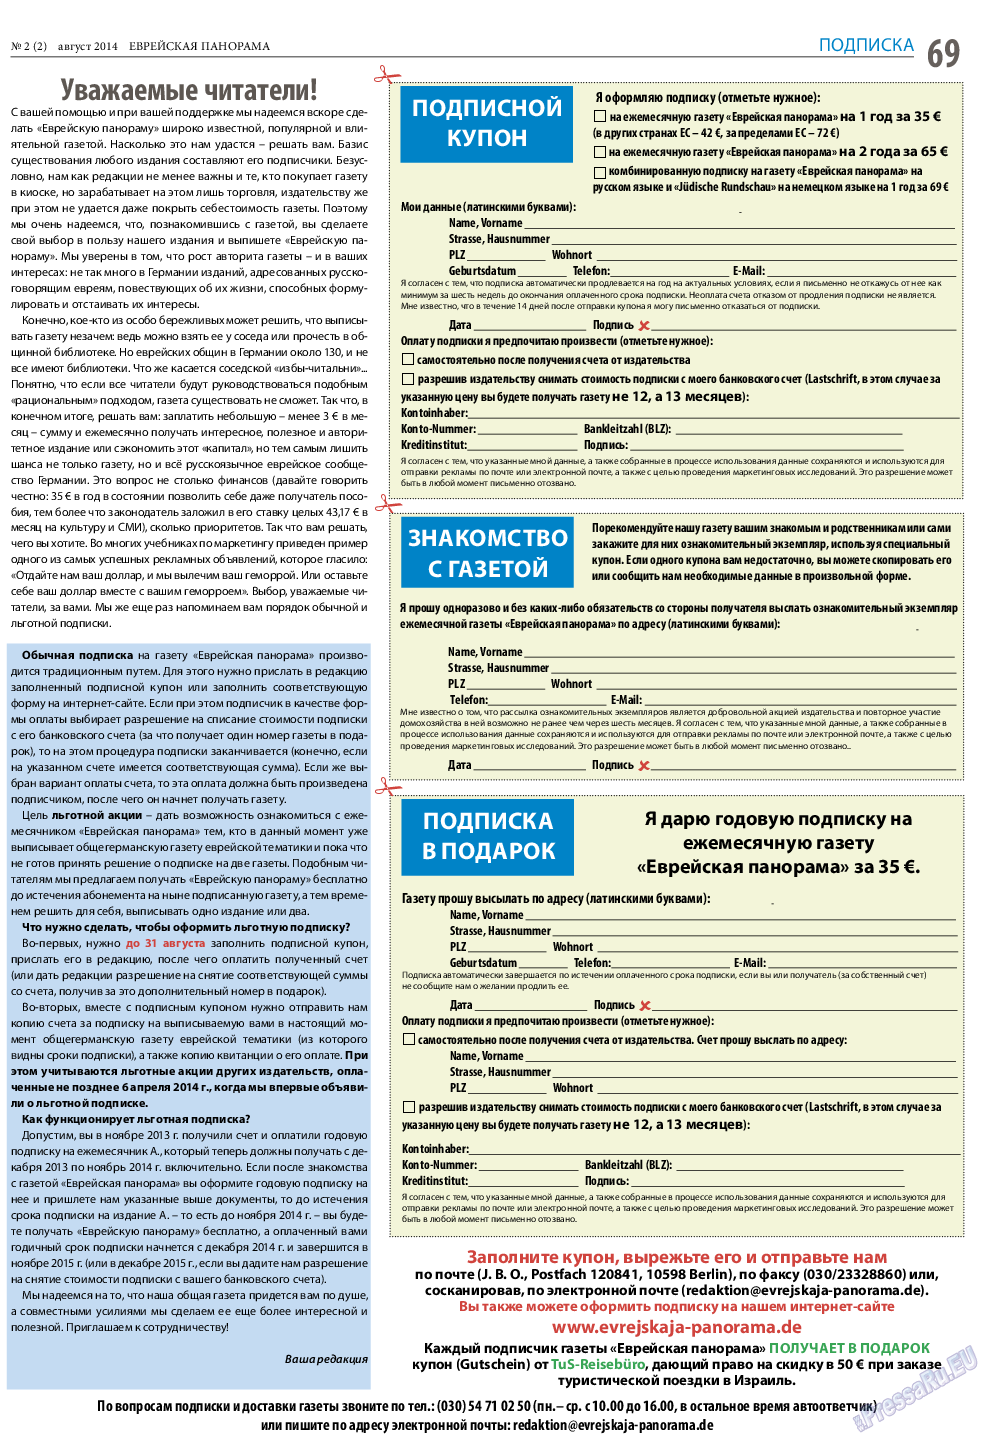 Еврейская панорама, газета. 2014 №2 стр.69